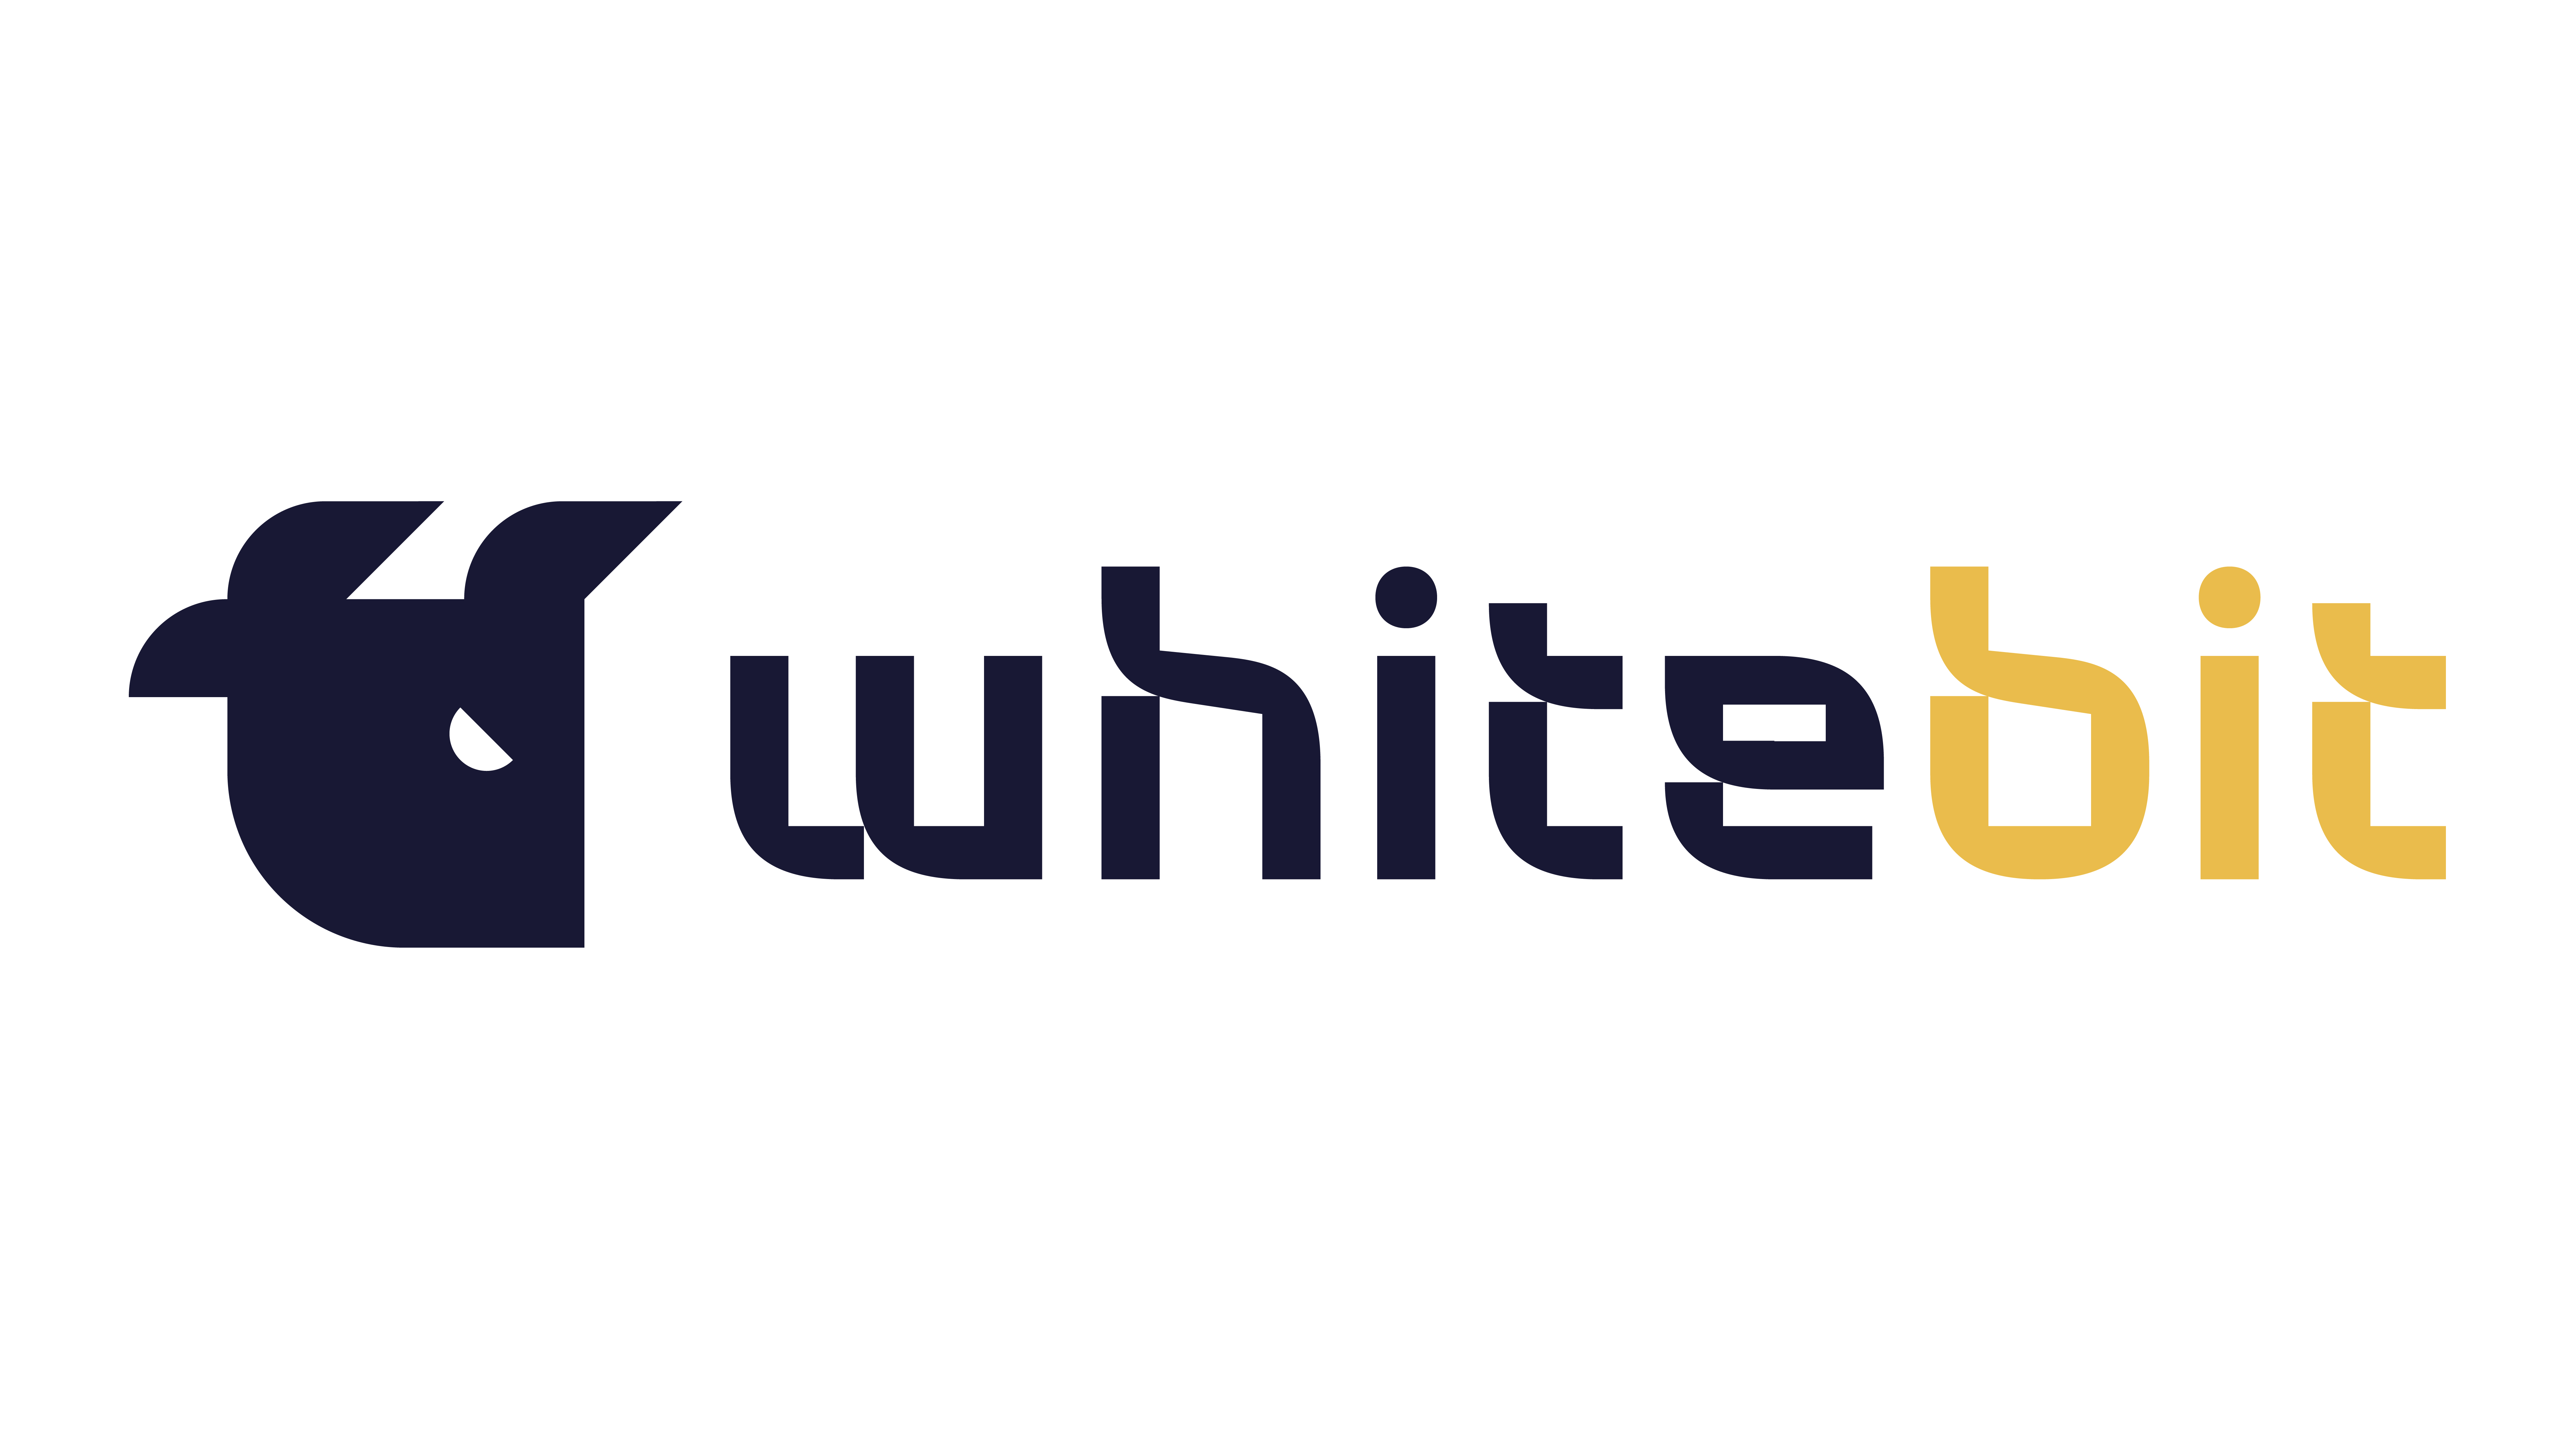 WhiteBIT Participates in the “Sports Tomorrow Congress” Organized by the Barcelona Innovation Hub